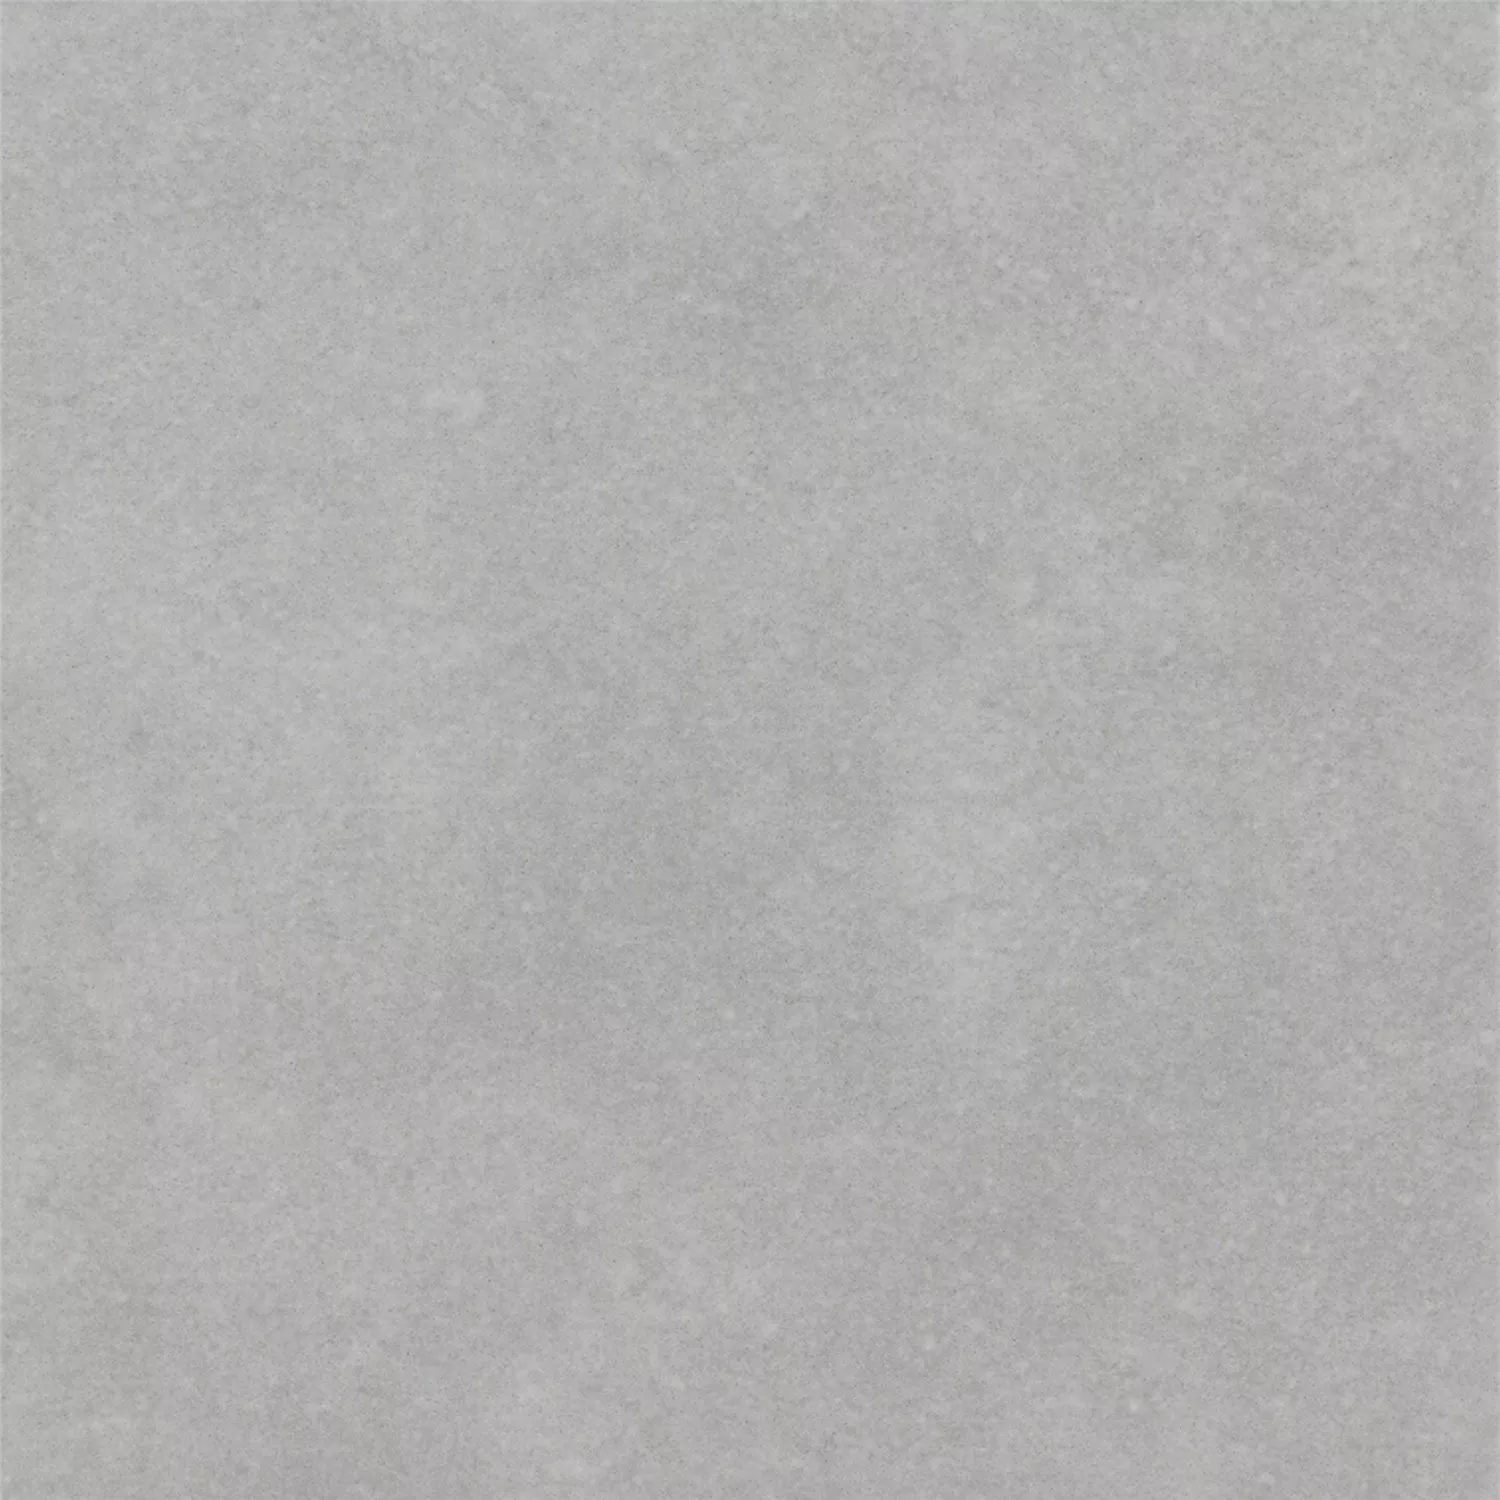 Vzorek Vzhled Cementové Dlaždice Gotik Základní Šedá 22,3x22,3cm